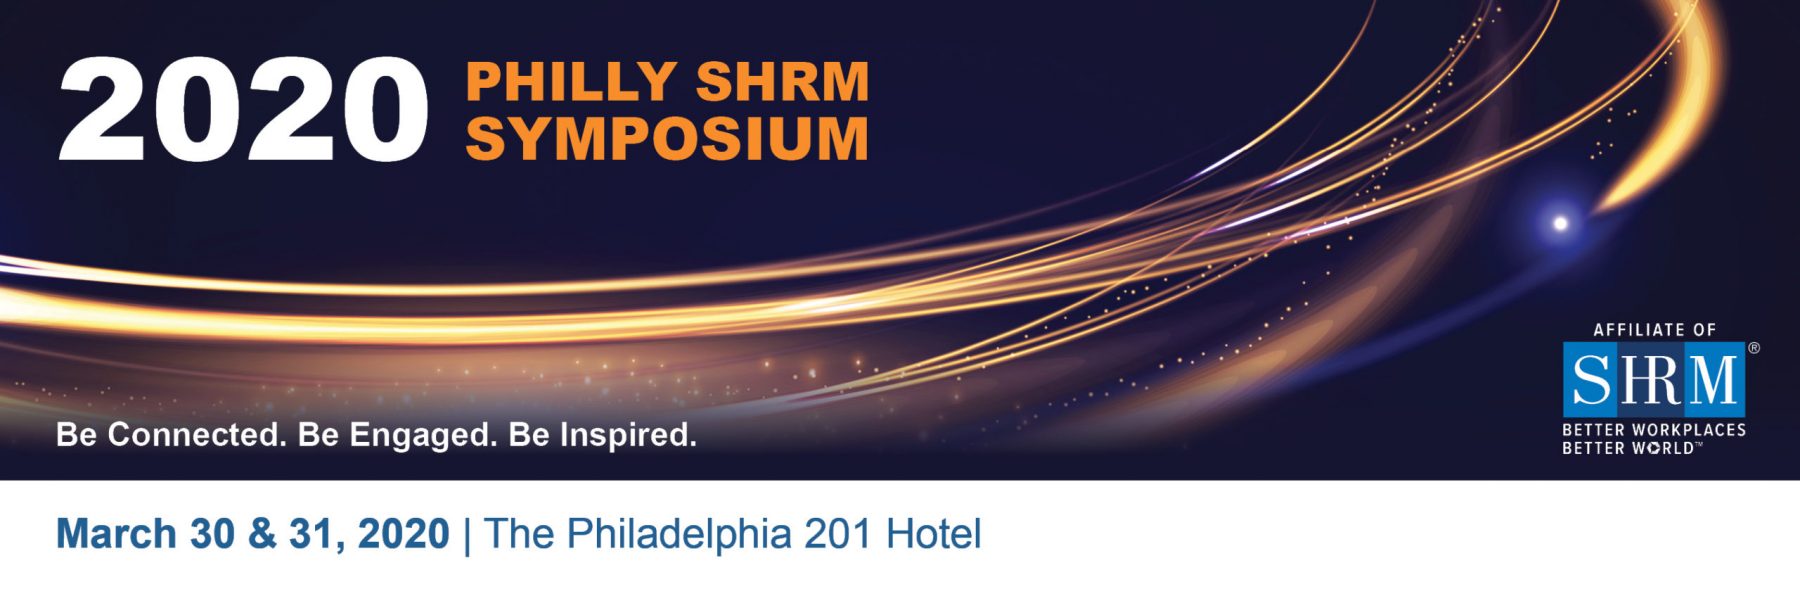 2020 Philly SHRM Symposium TriState HRMA